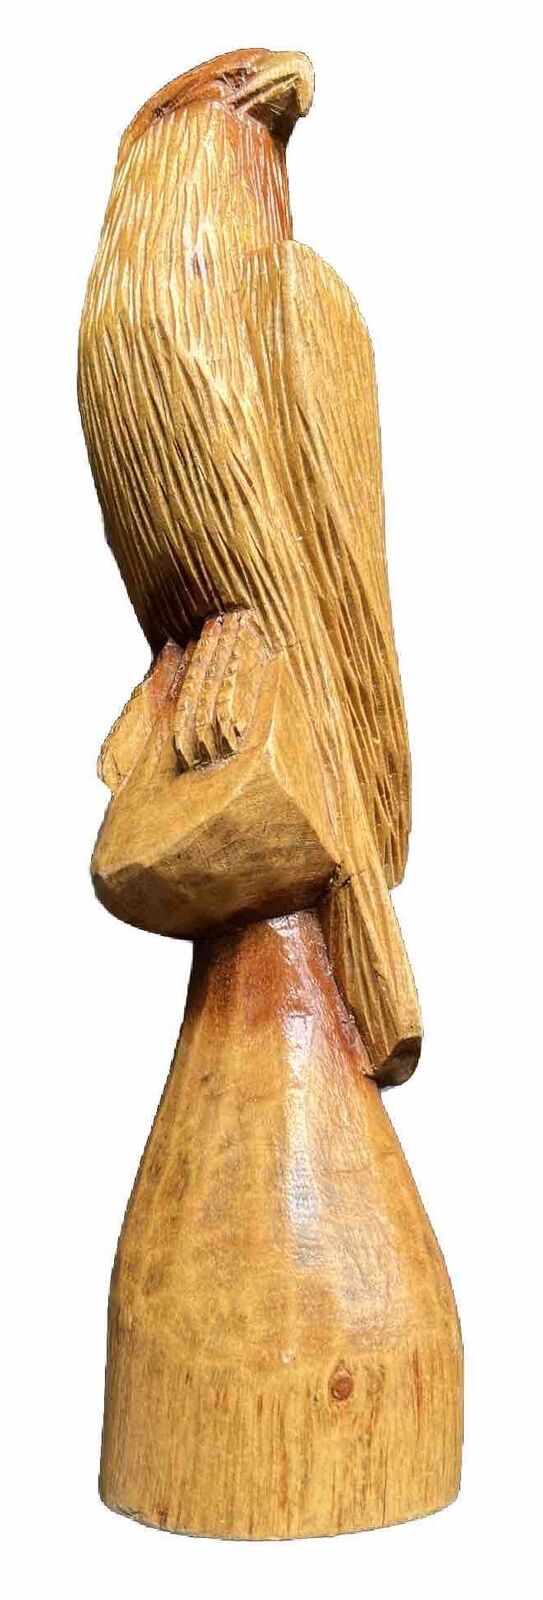 1995 Rare Wooden Hand Carved Hawk Eagle Nassau Bahamas Souvenir 14.5” Statue Art